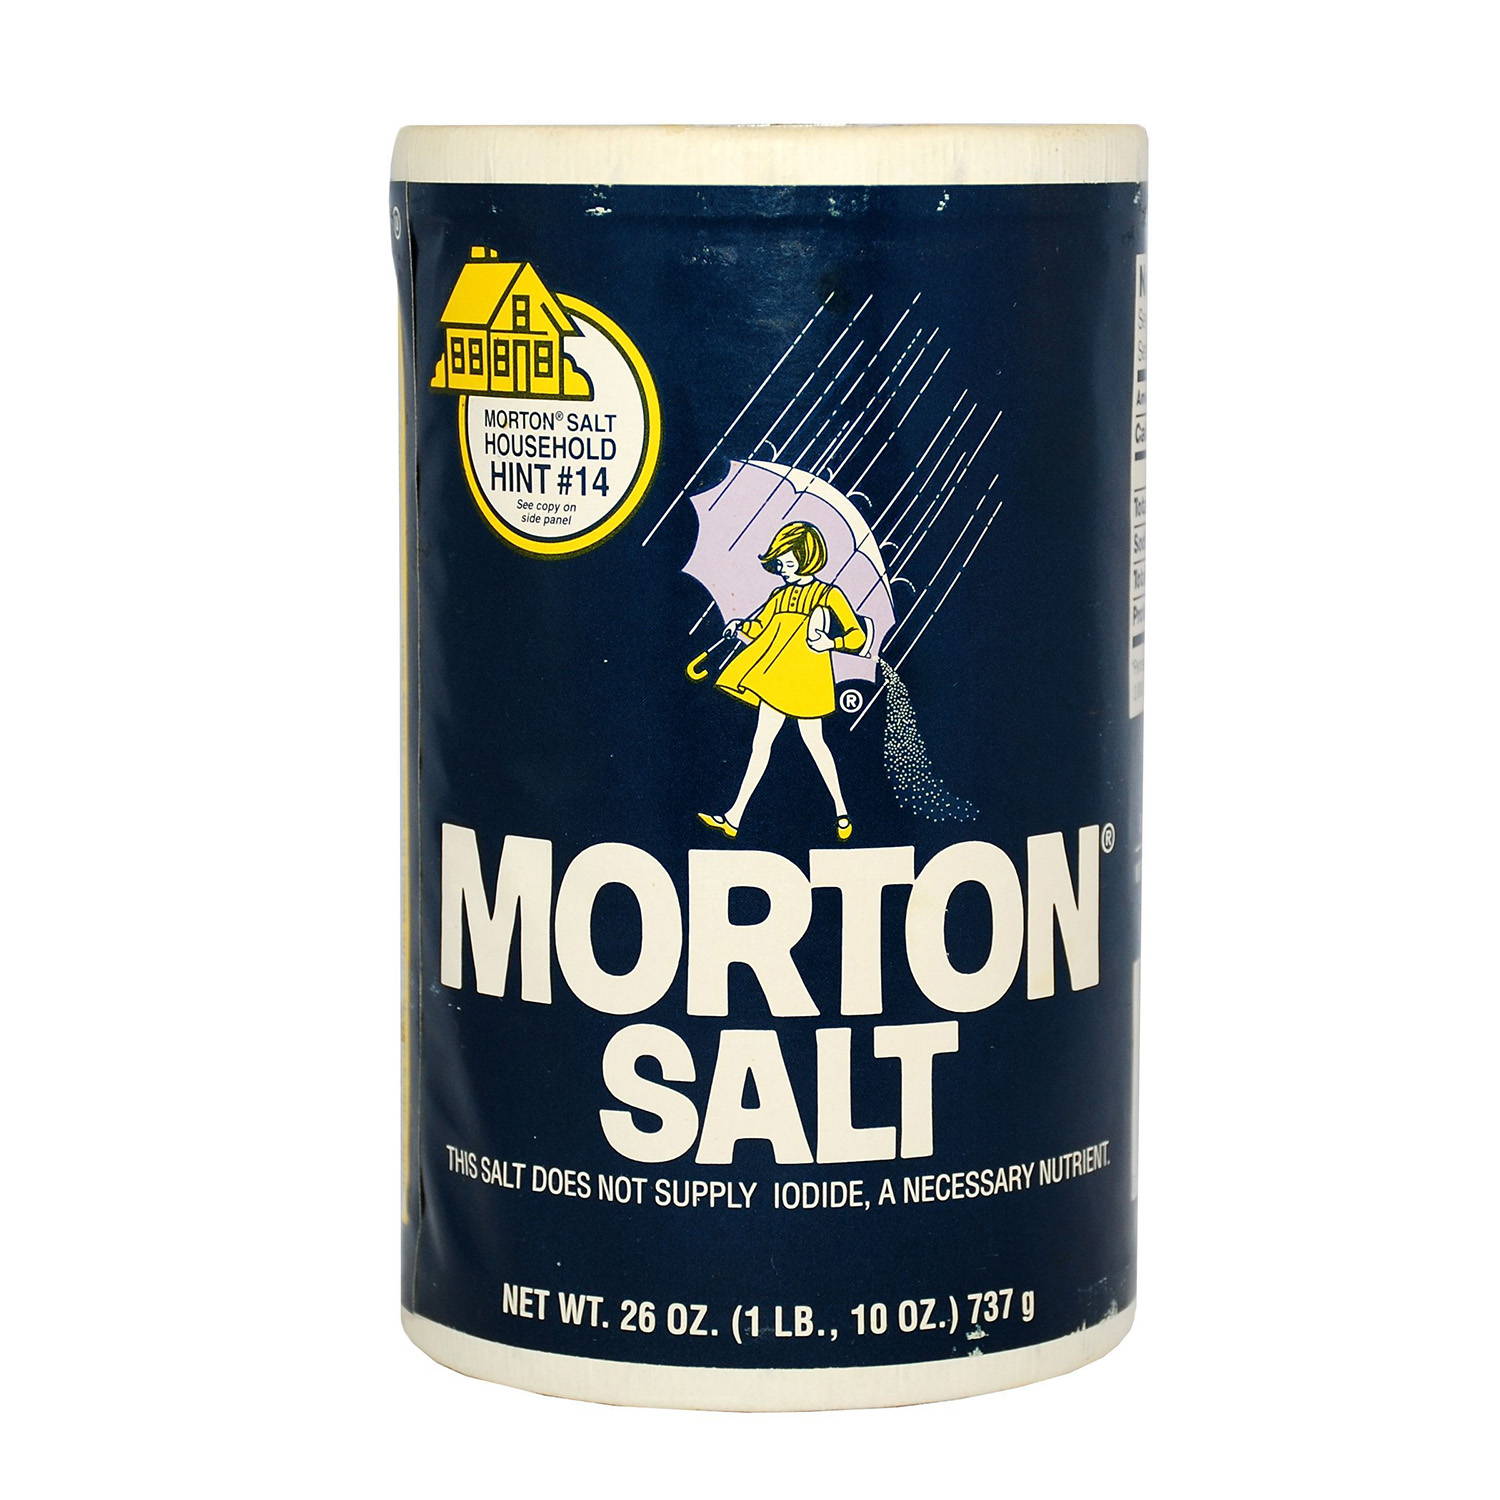 Morton Salt Box